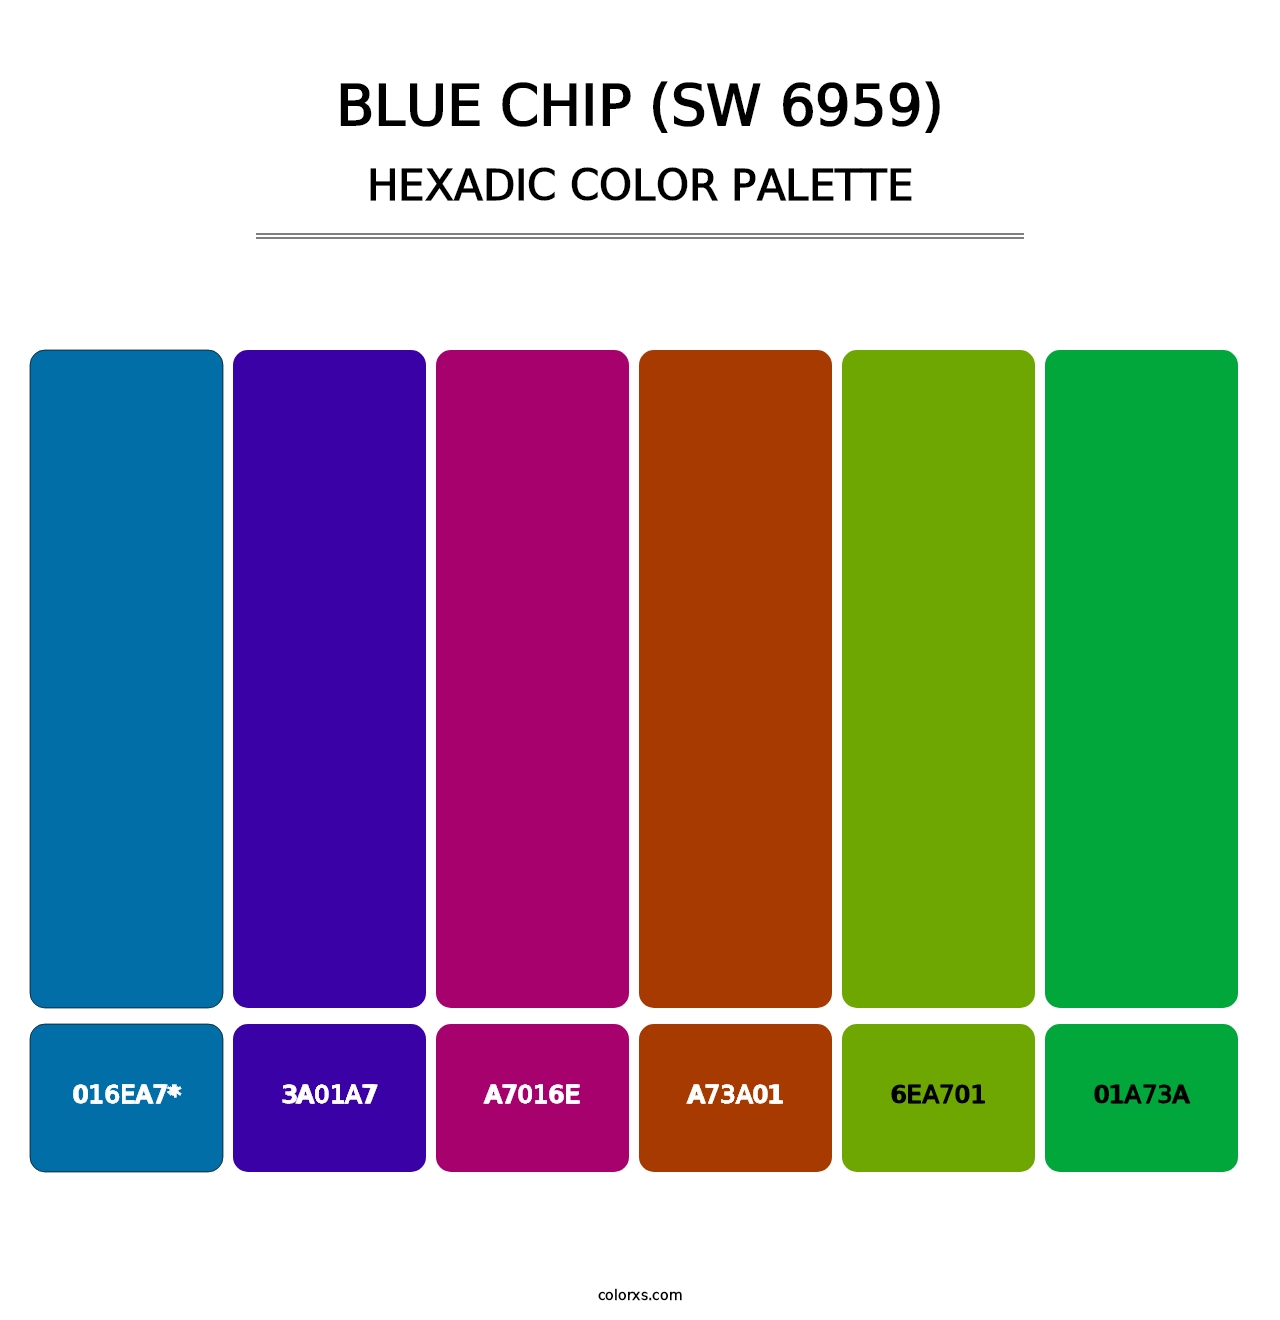 Blue Chip (SW 6959) - Hexadic Color Palette